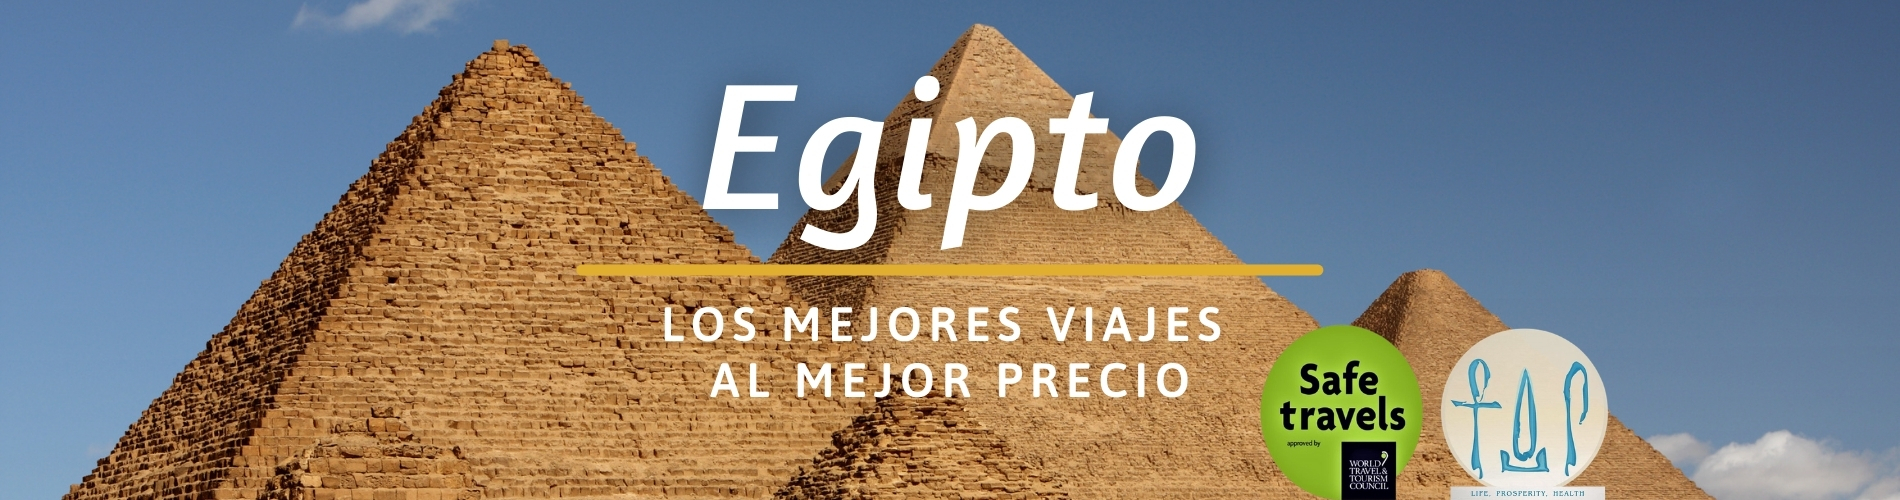 saraya tour egipto